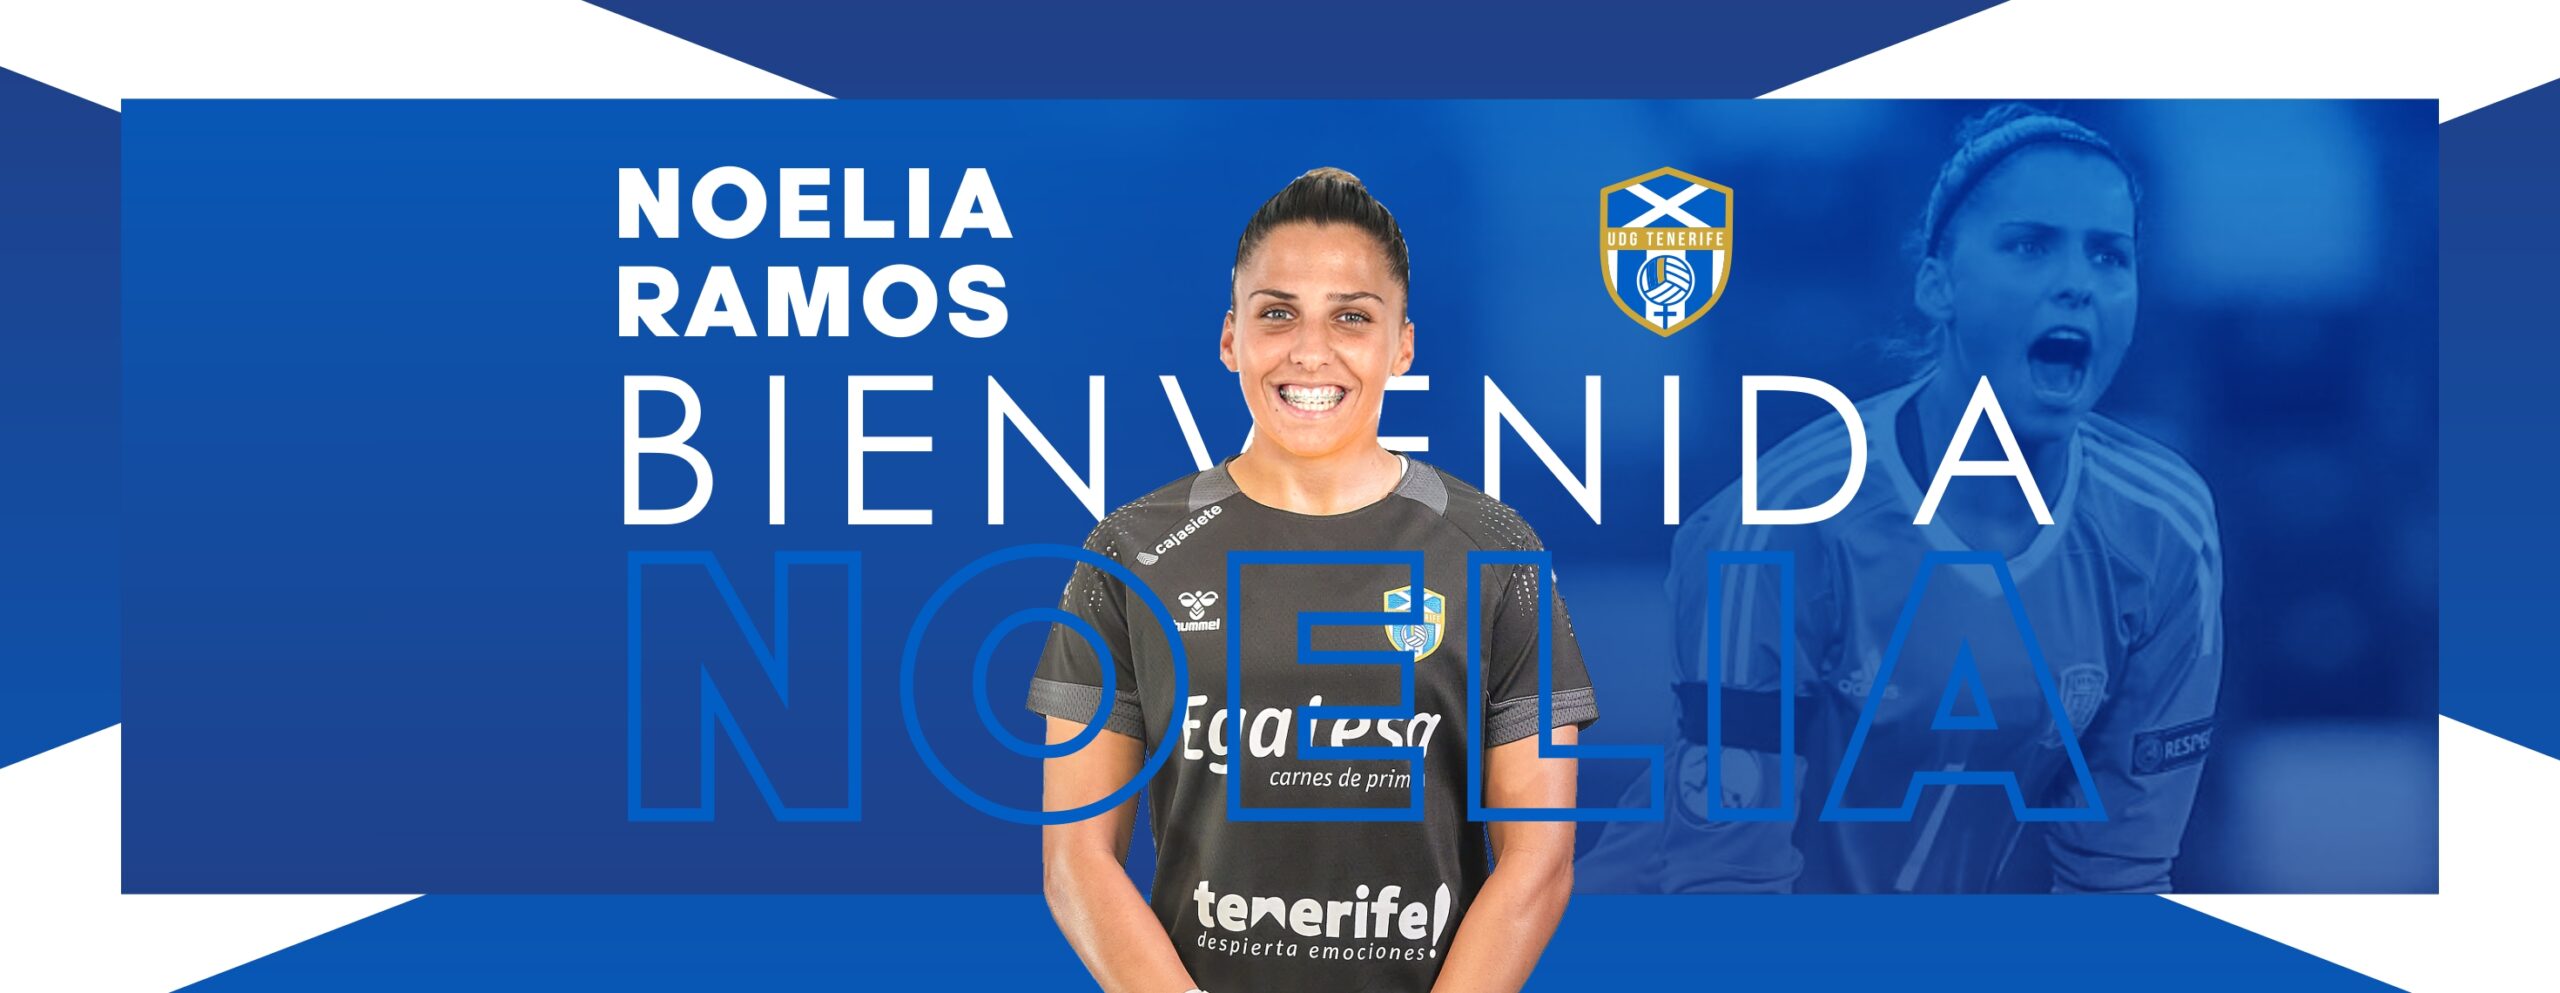 Noelia Ramos vuelve a la UDG Tenerife